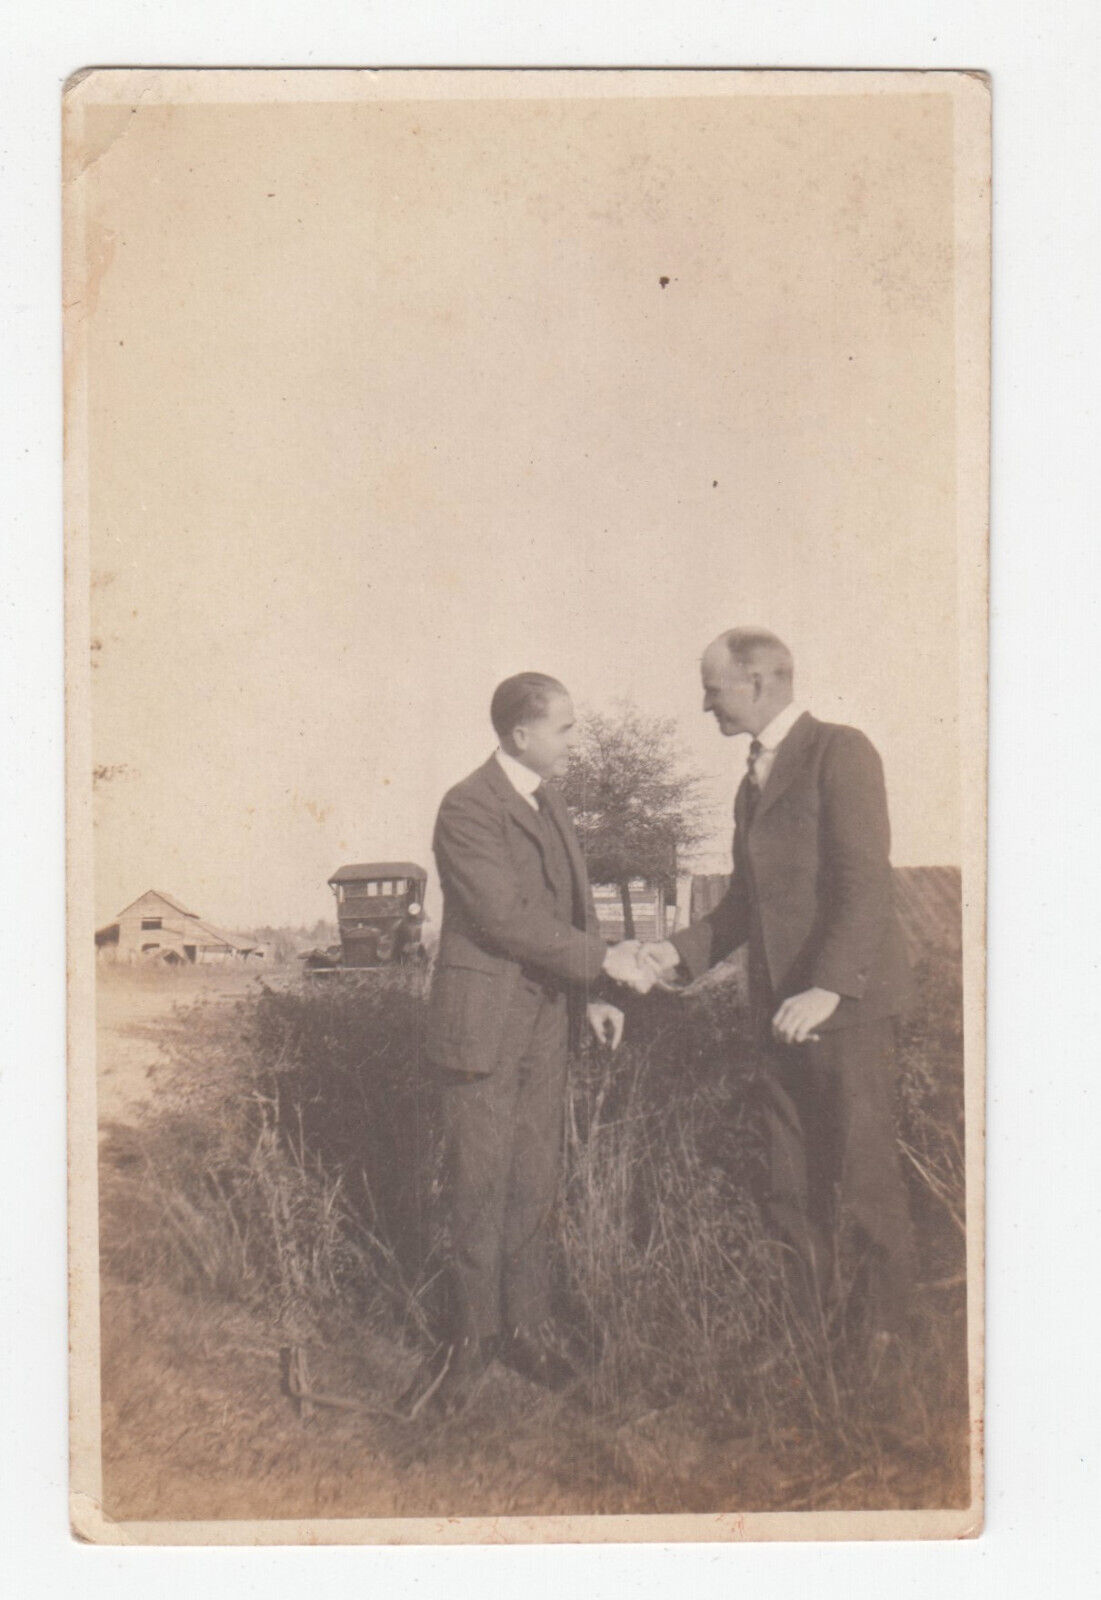 Vintage Photo early 1900s Men sharing Handshake Farm Field Id'd Old Car